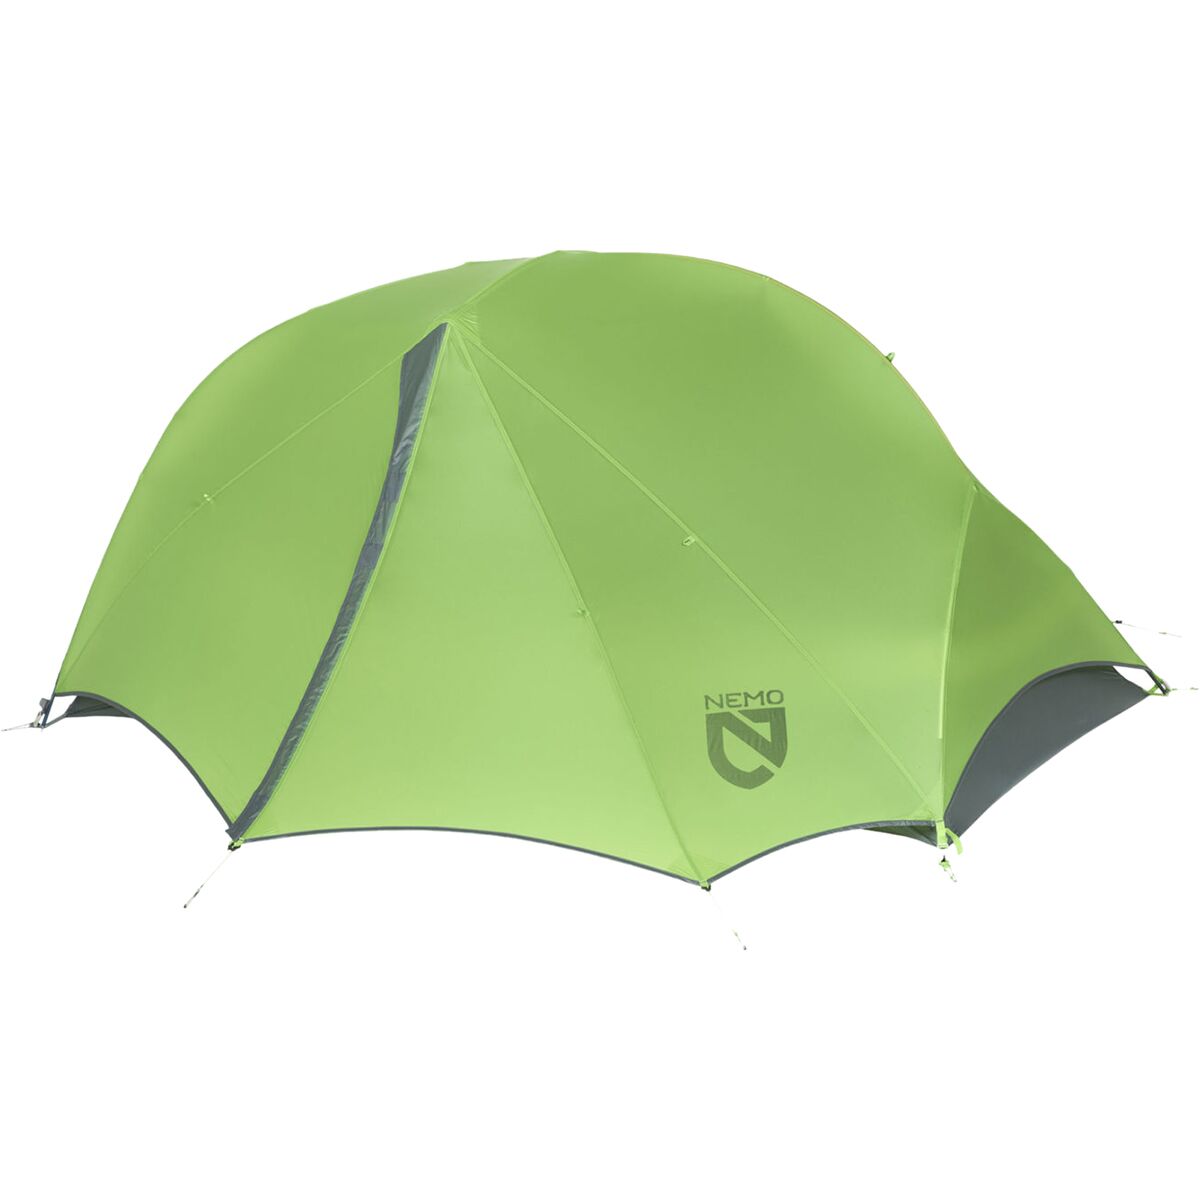 NEMO Equipment Inc. Dragonfly Tent: 1-Person 3-Season